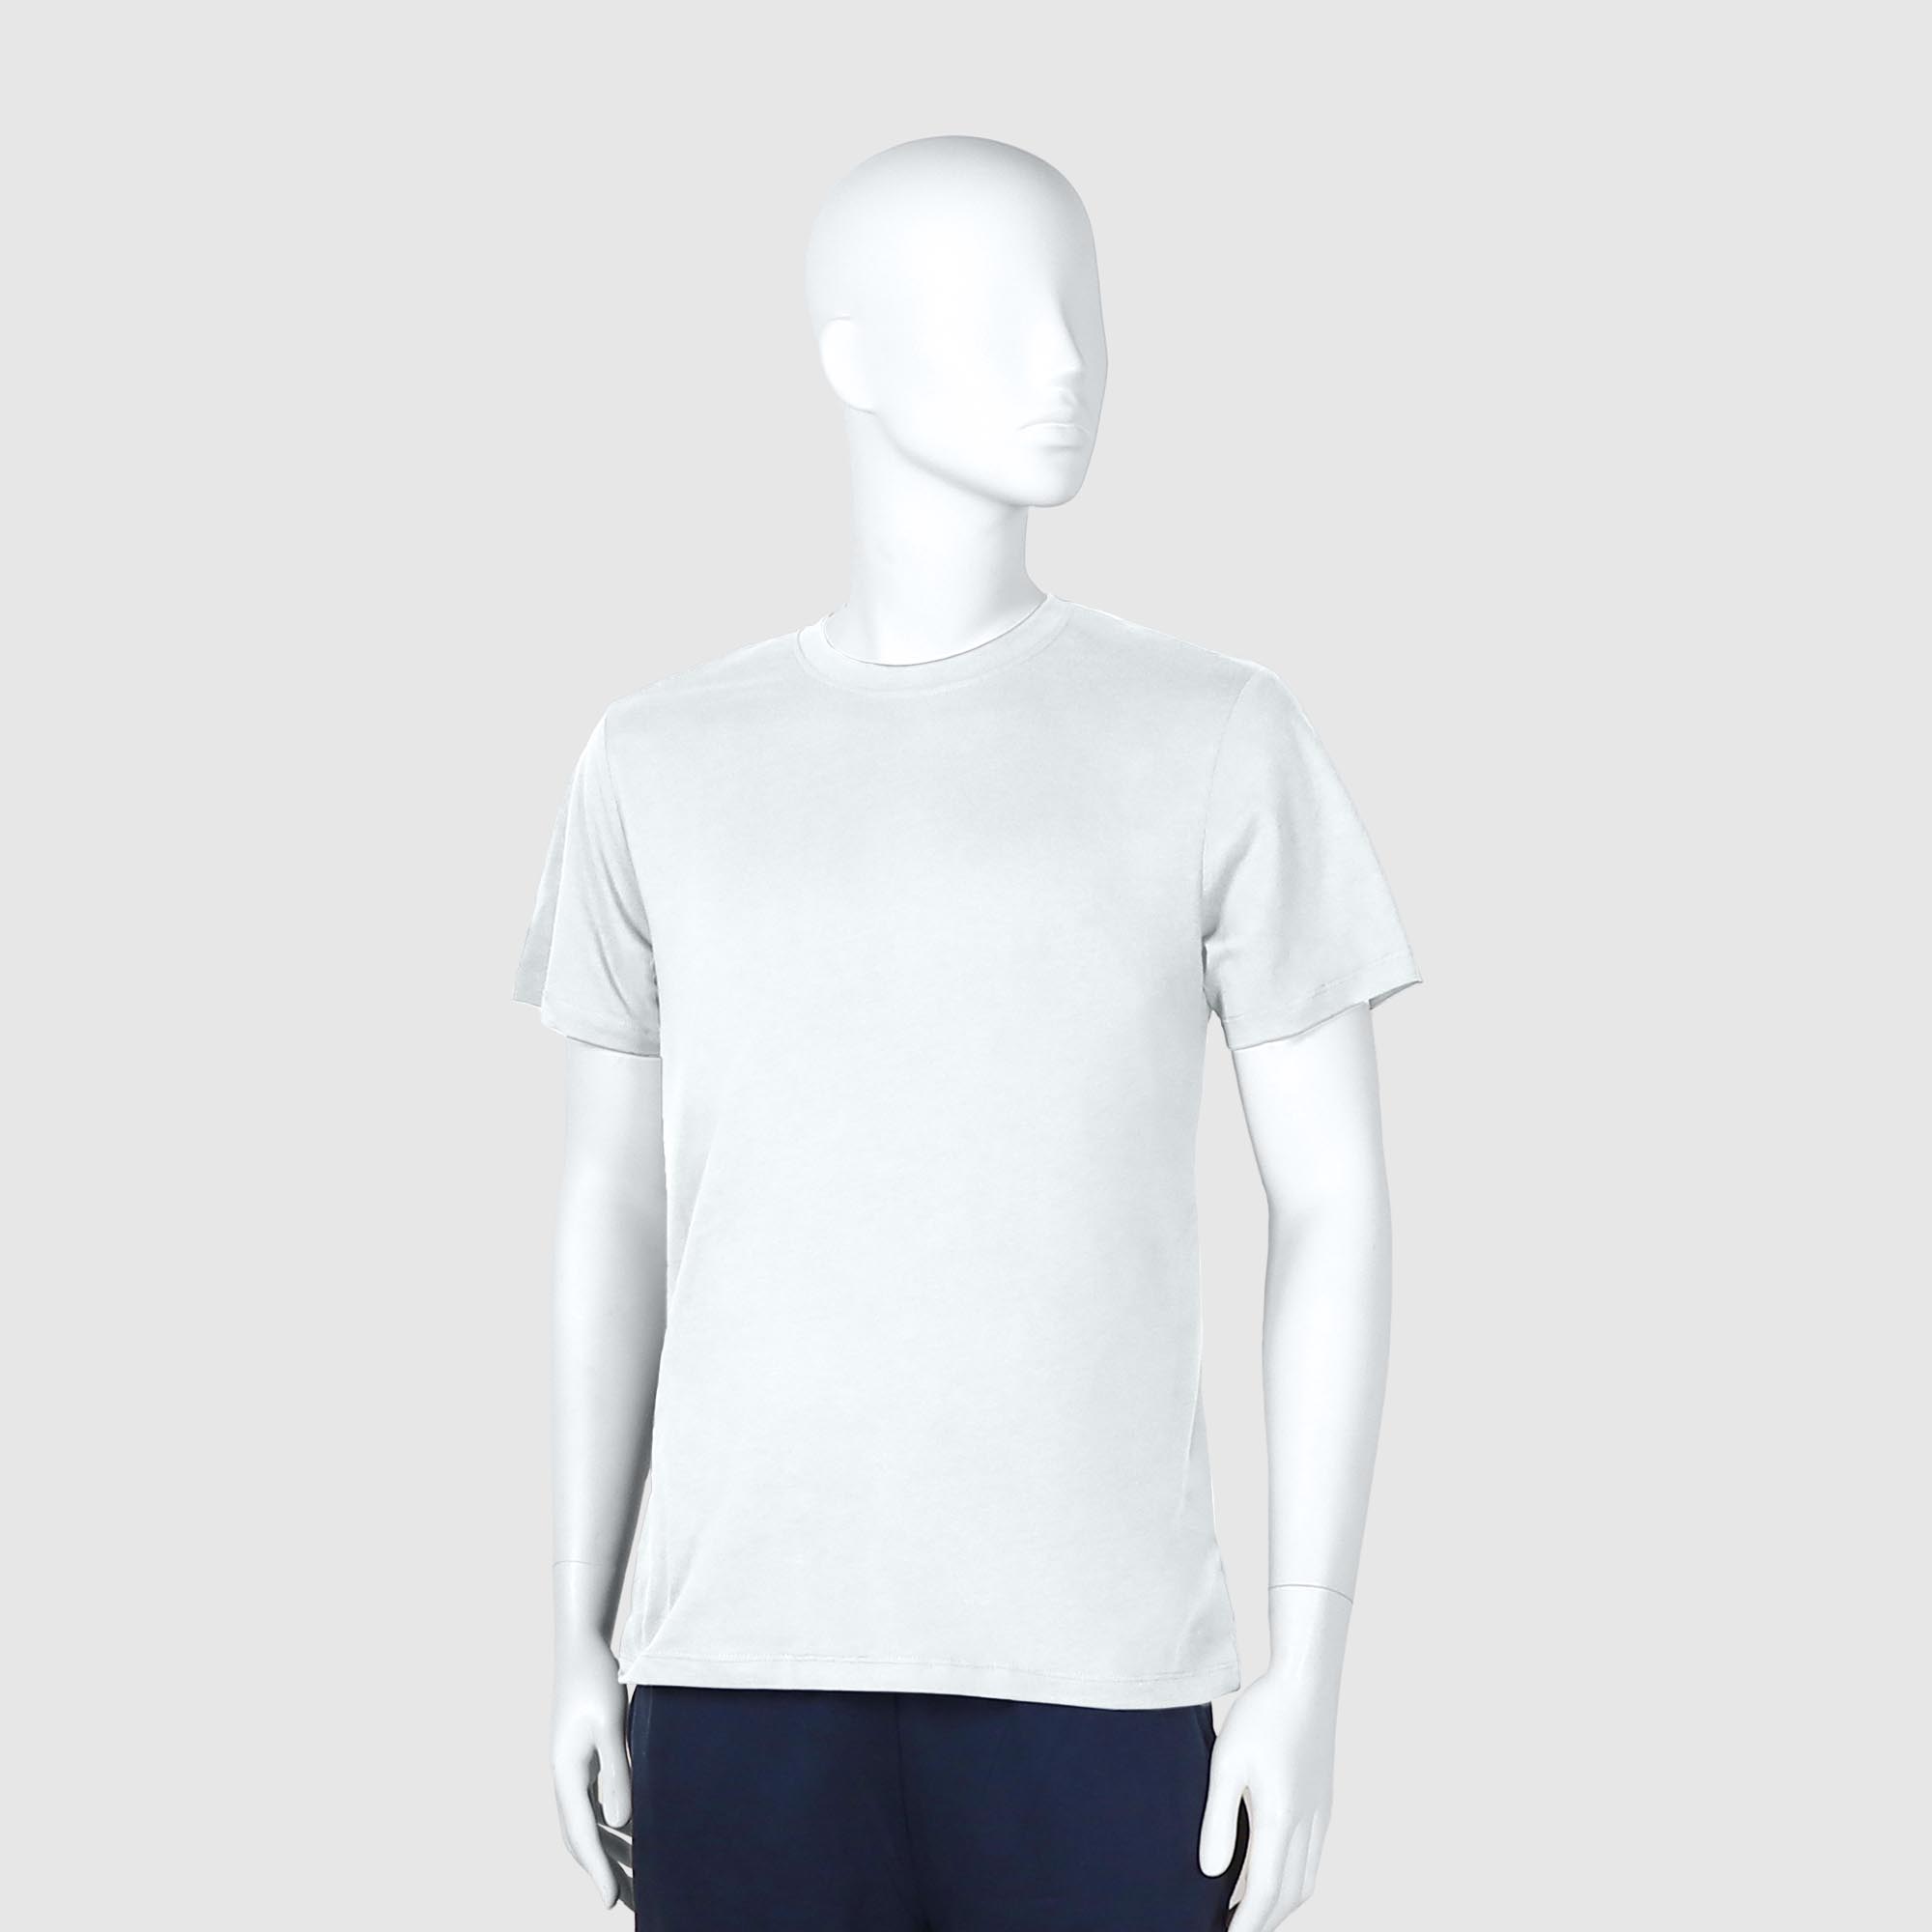 Мужская футболка Diva Teks белая (DTD-02), цвет белый, размер 48-50 - фото 1